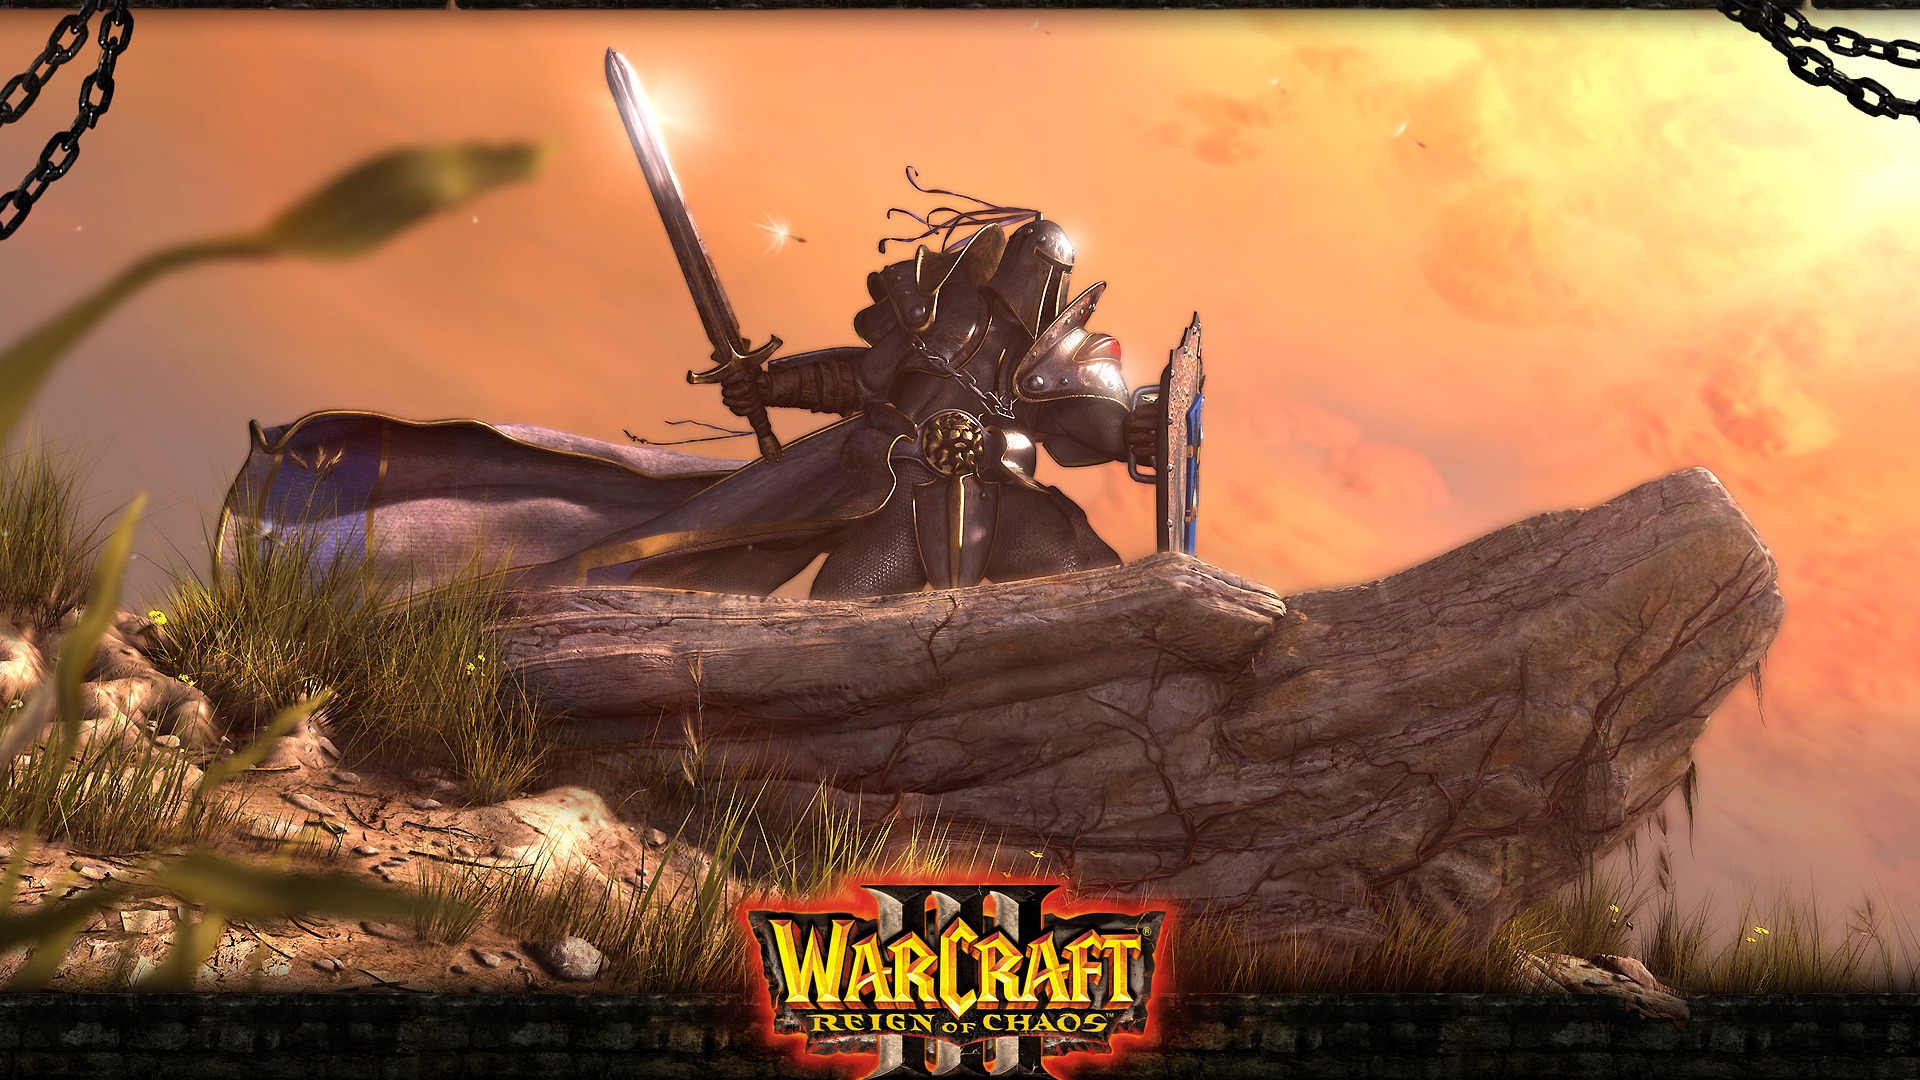 World of Warcraft 魔兽世界高清壁纸(二)13 - 1920x1080